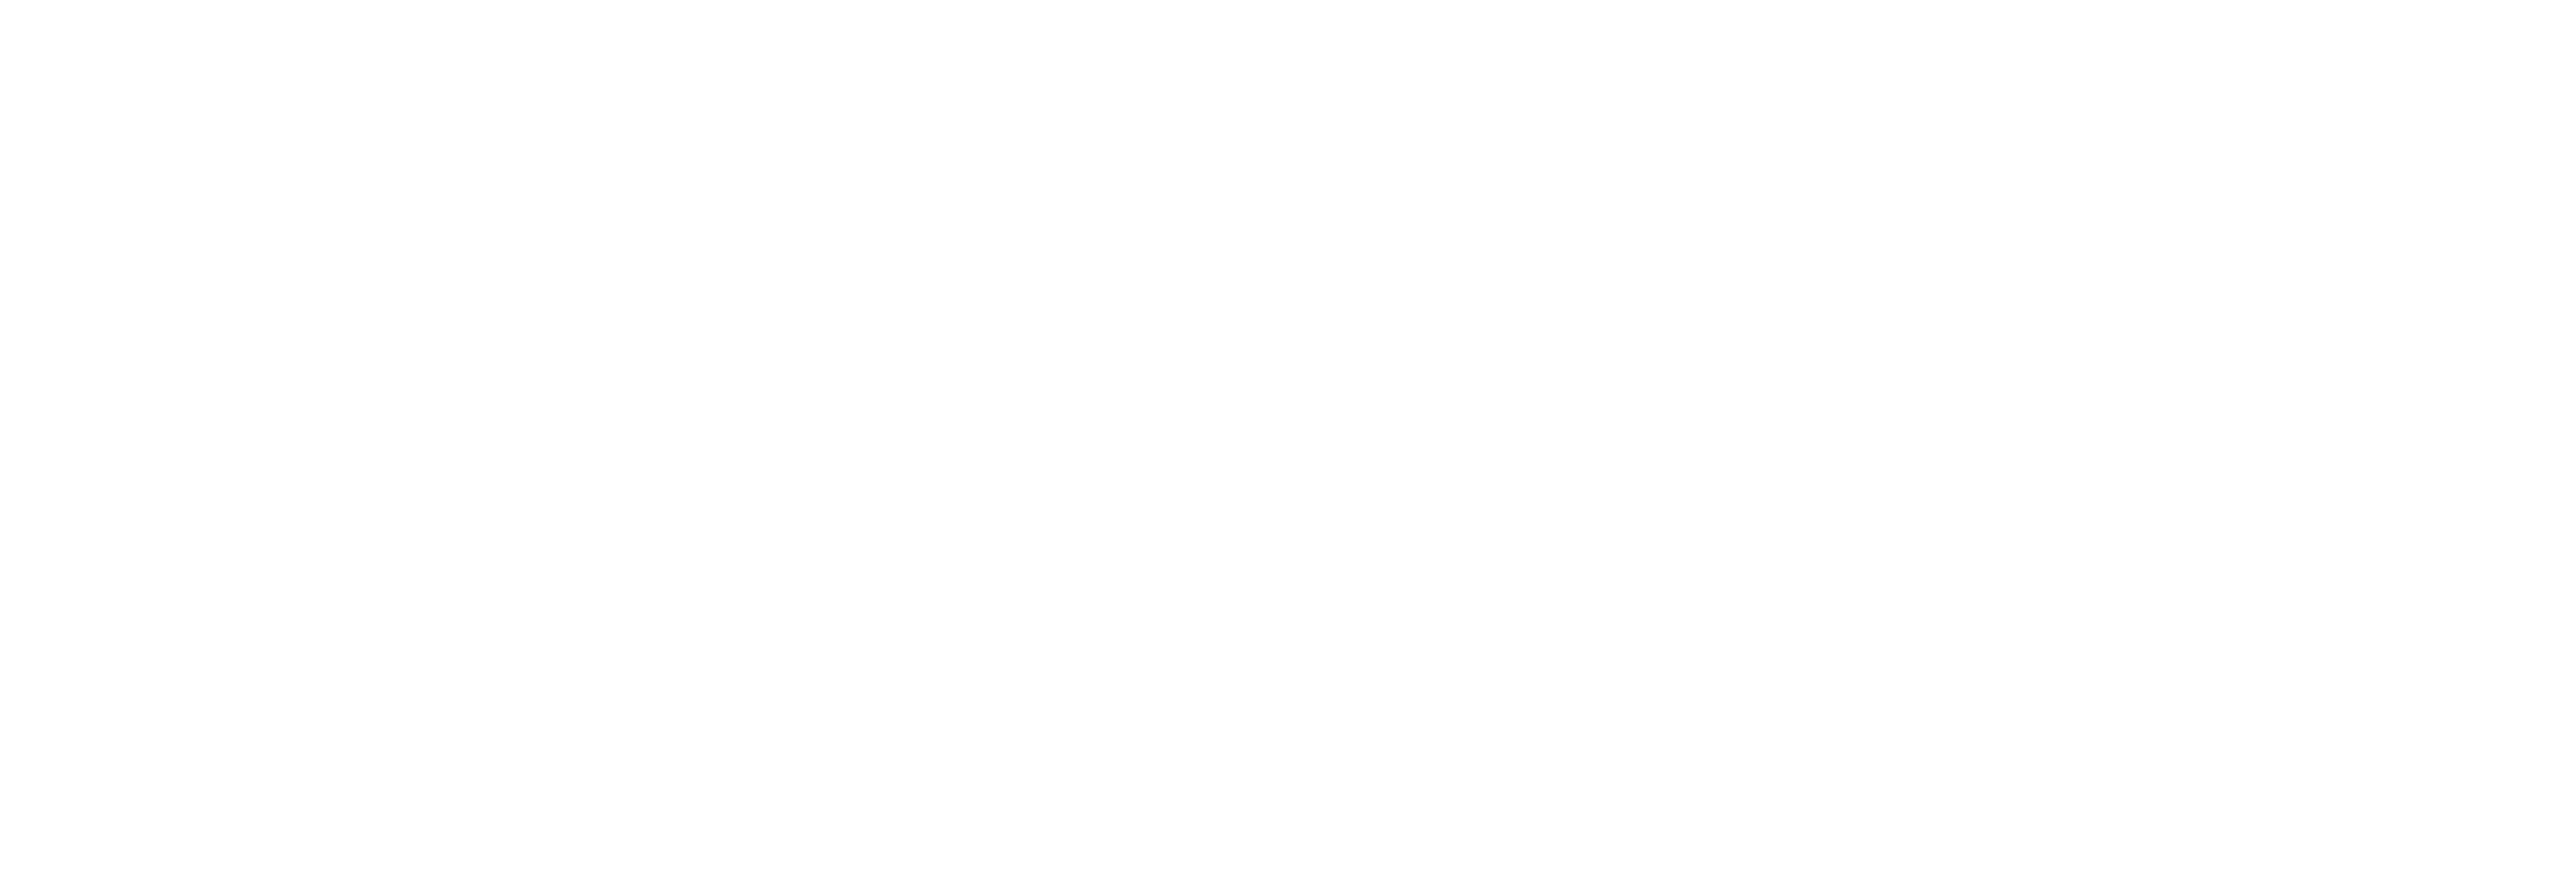 AniCura Dyrlægehuset Odense logo